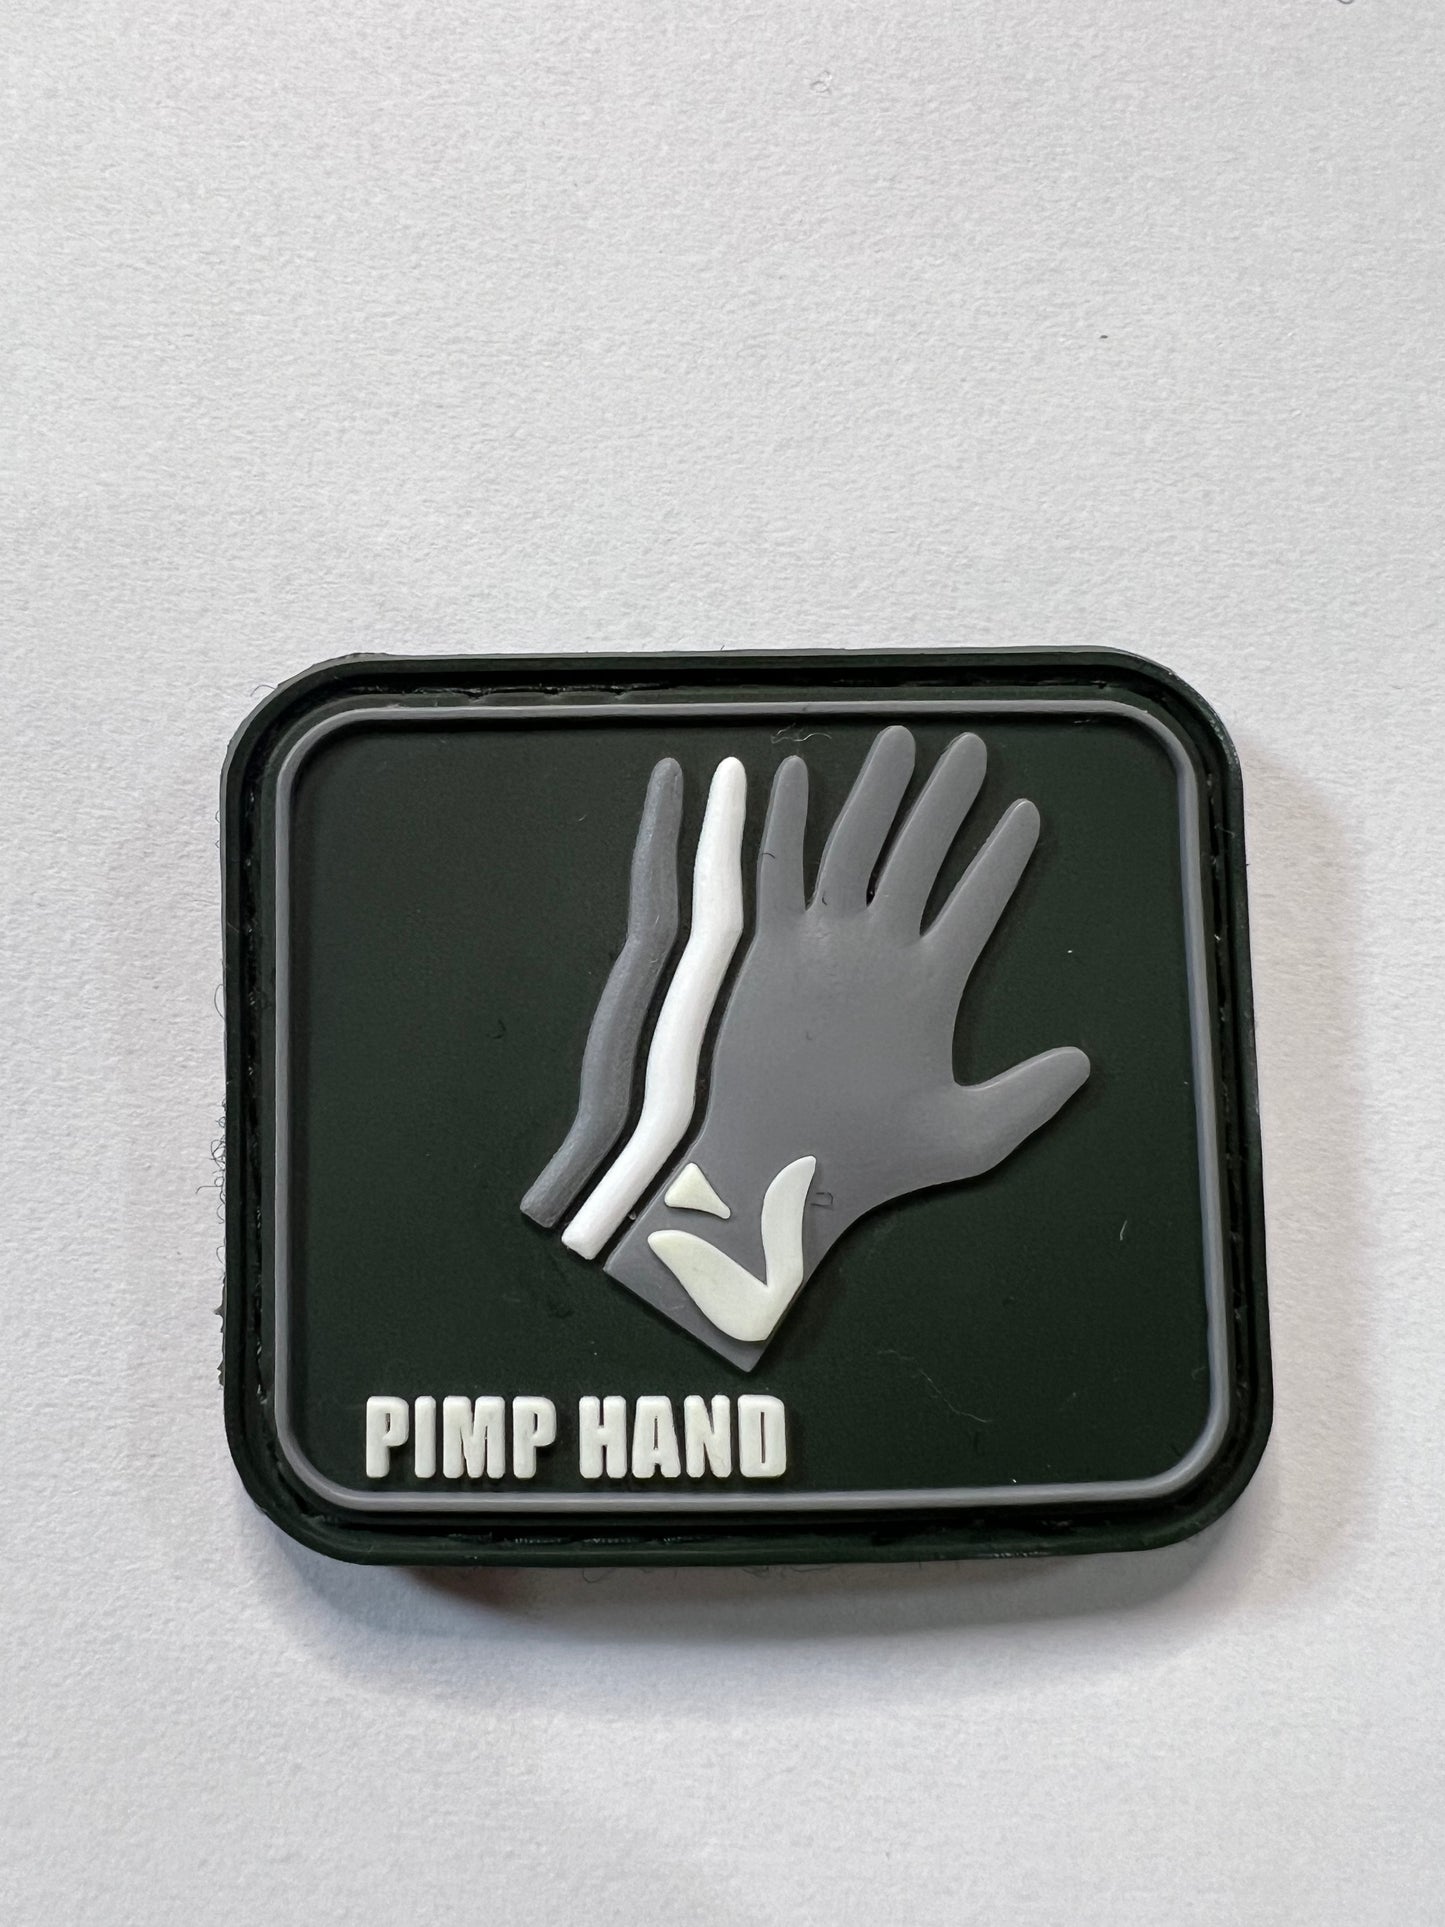 Pimp Hand Perk Patch